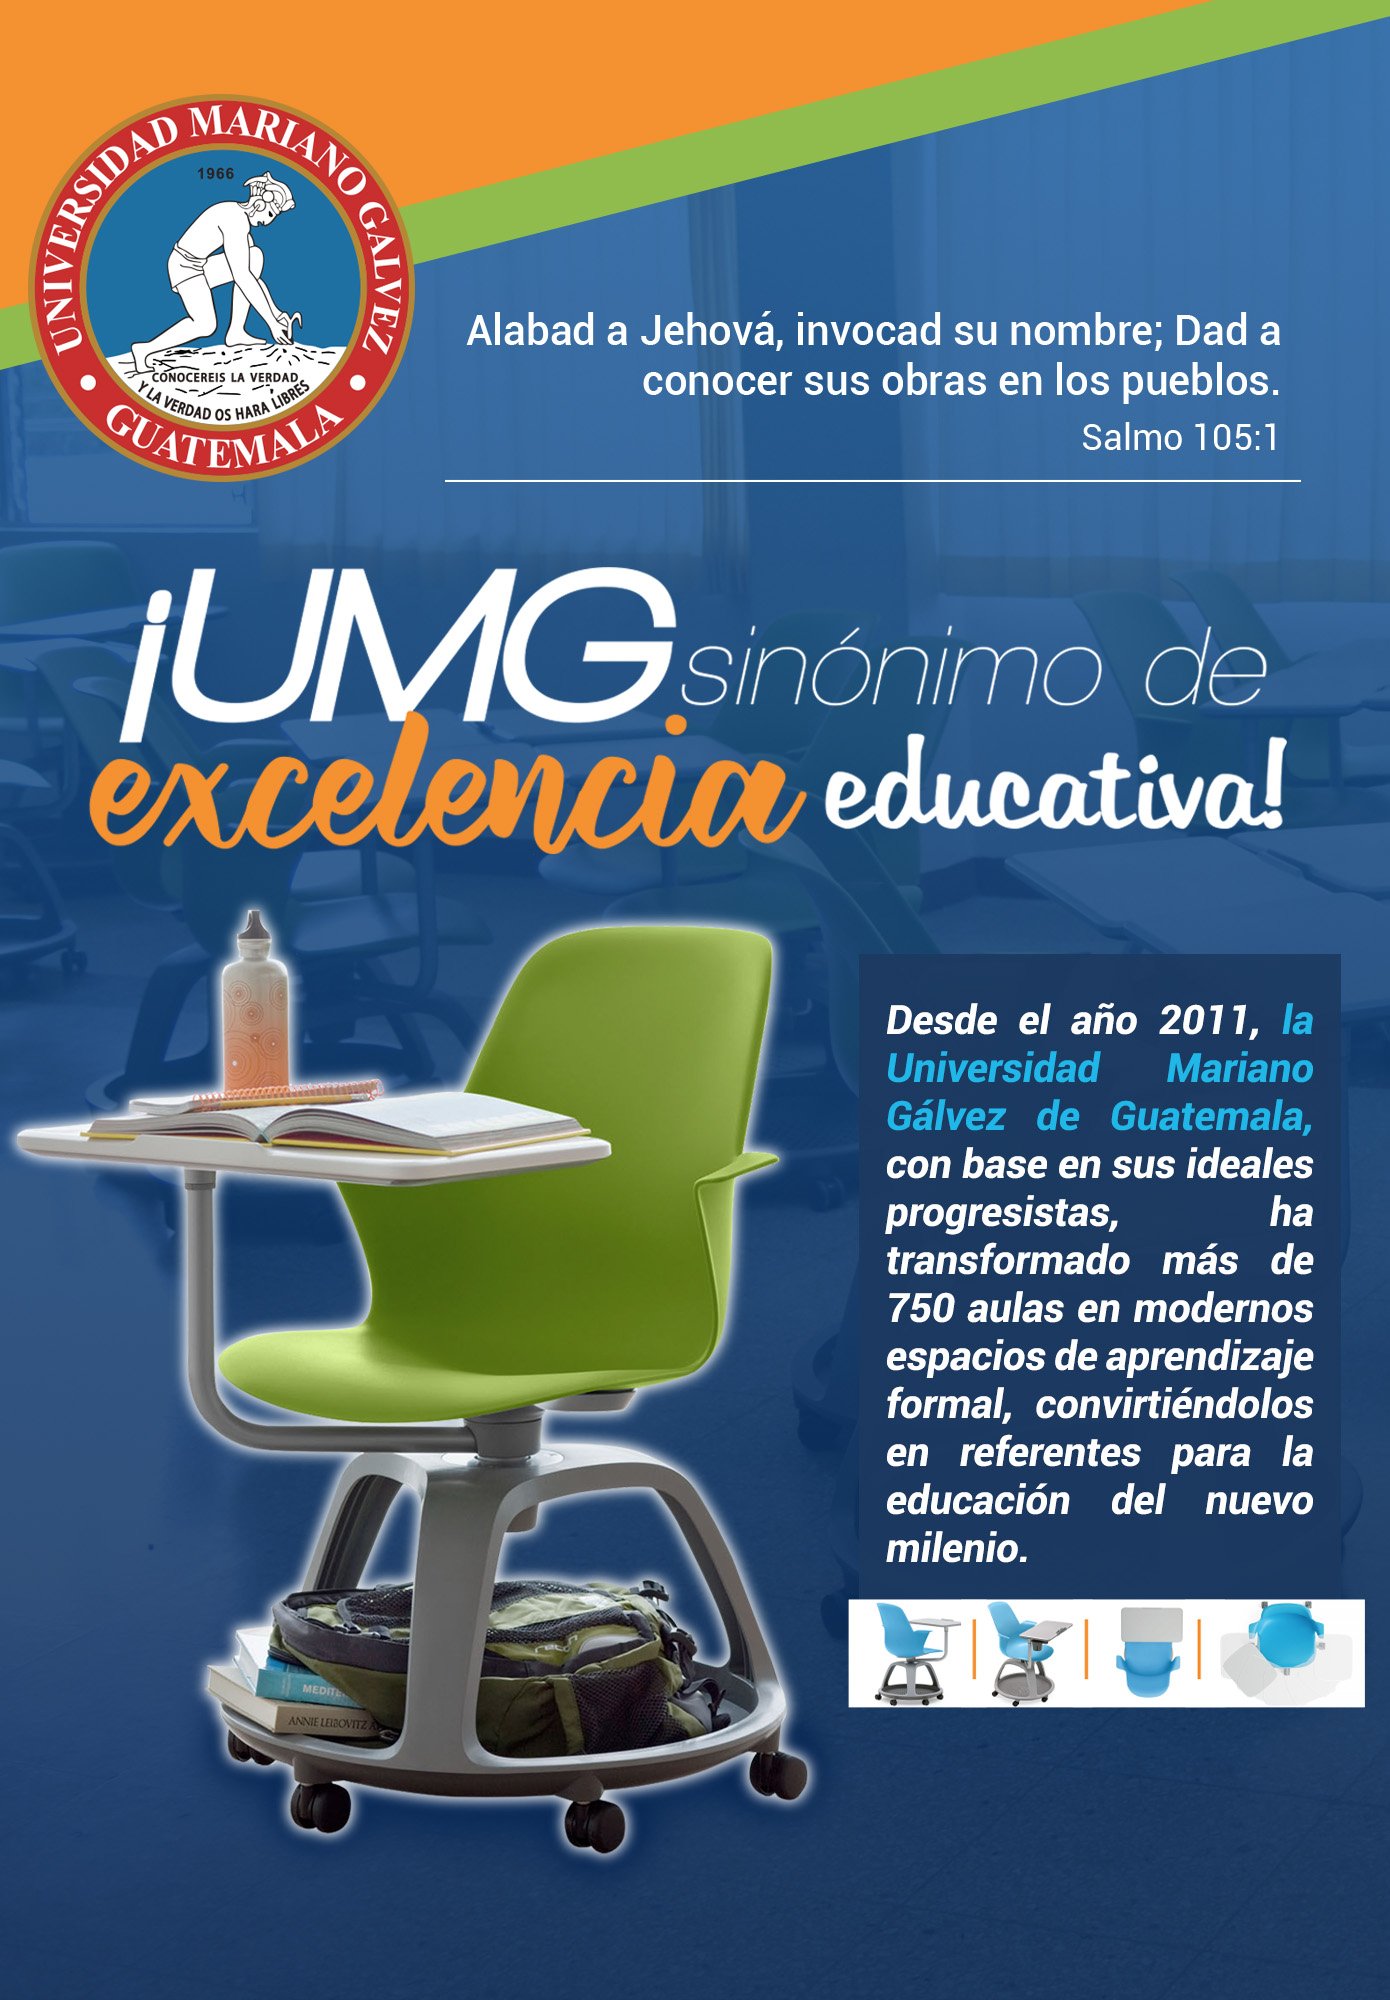 U. Mariano 트위터: "Universidad Mariano Gálvez de Guatemala de Excelencia Educativa. https://t.co/4N0u4qsYQf" 트위터